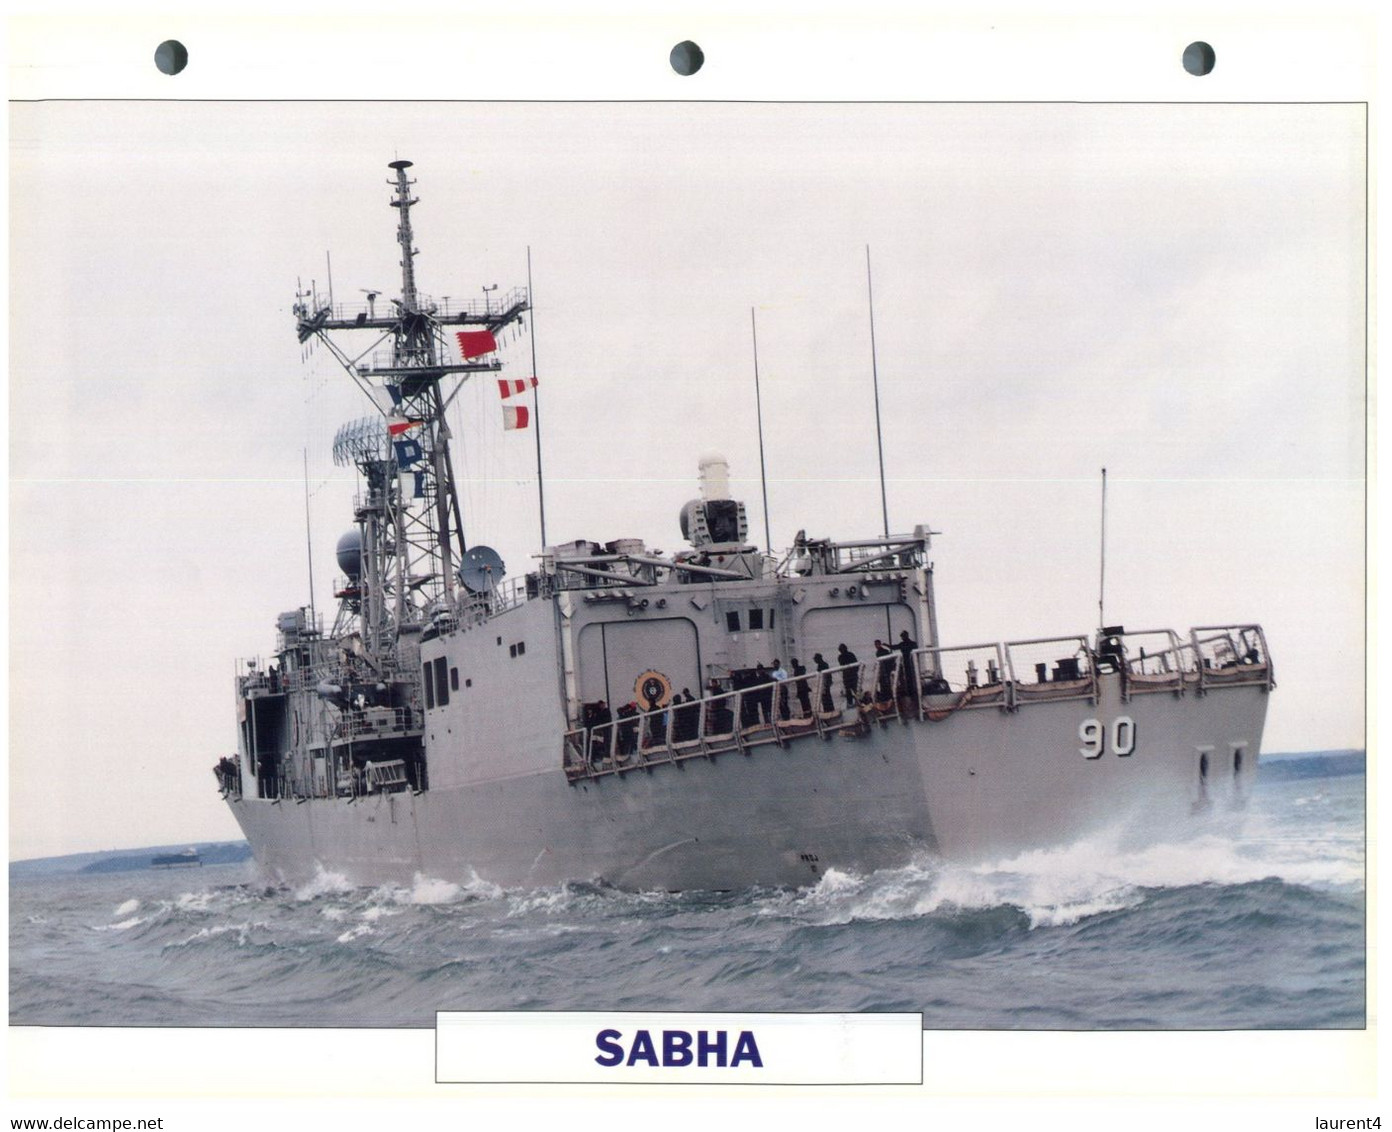 (25 X 19 Cm) (8-9-2021) - T - Photo And Info Sheet On Warship - Bahrain Navy - Sabha - Bateaux